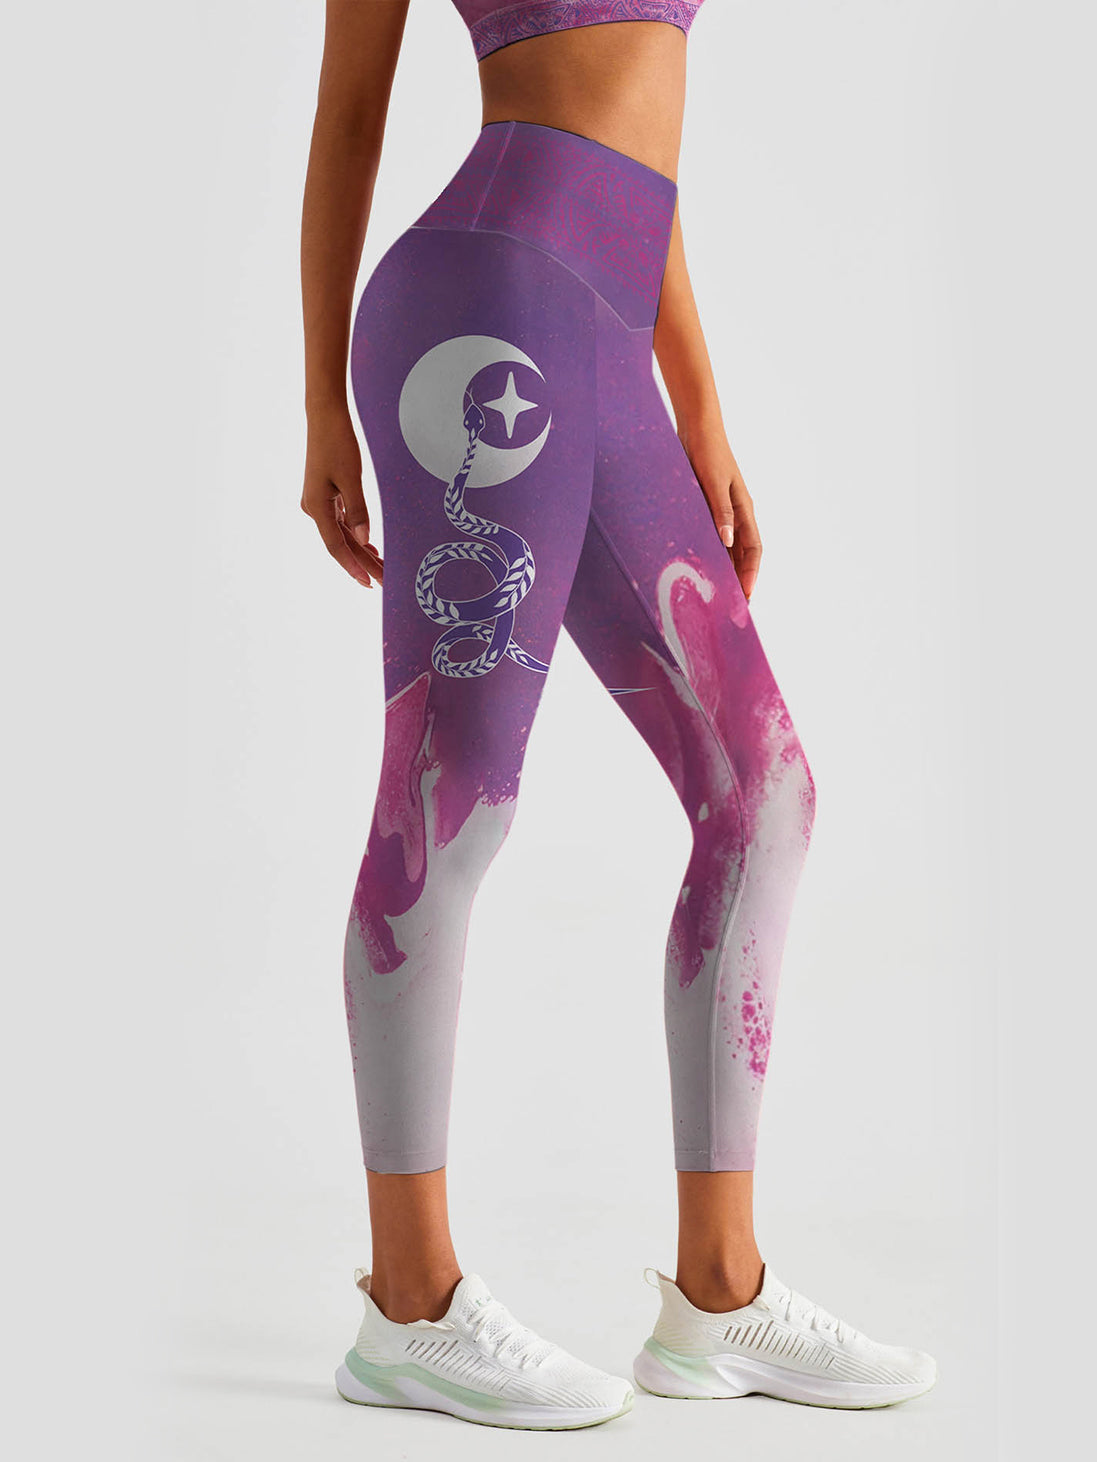 Cosmos celestial bodies moon snake design purple leggings